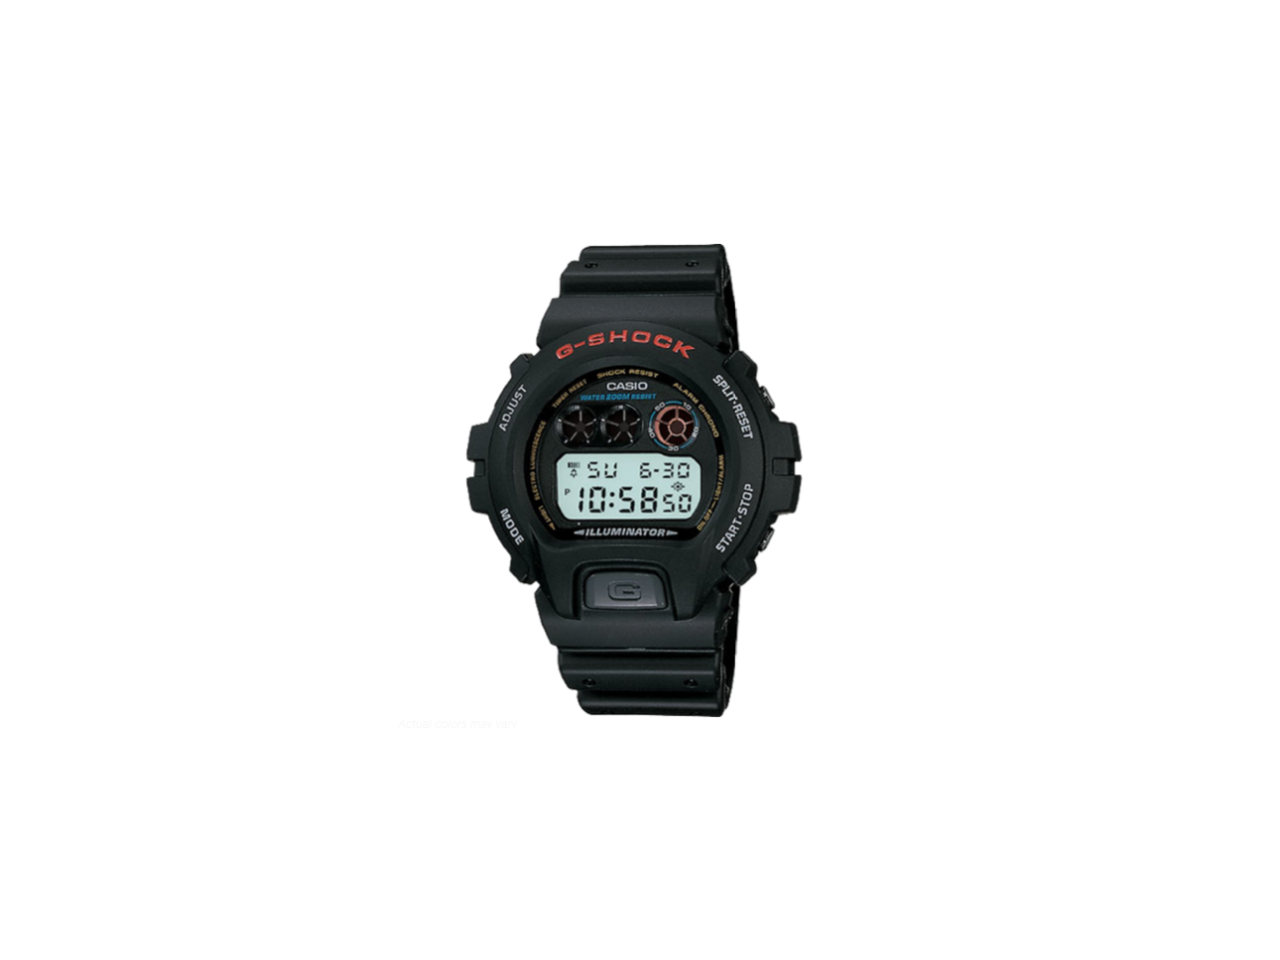 Casio Men's G-Shock Black Classic Digital Watch DW6900-1V - image 3 of 5